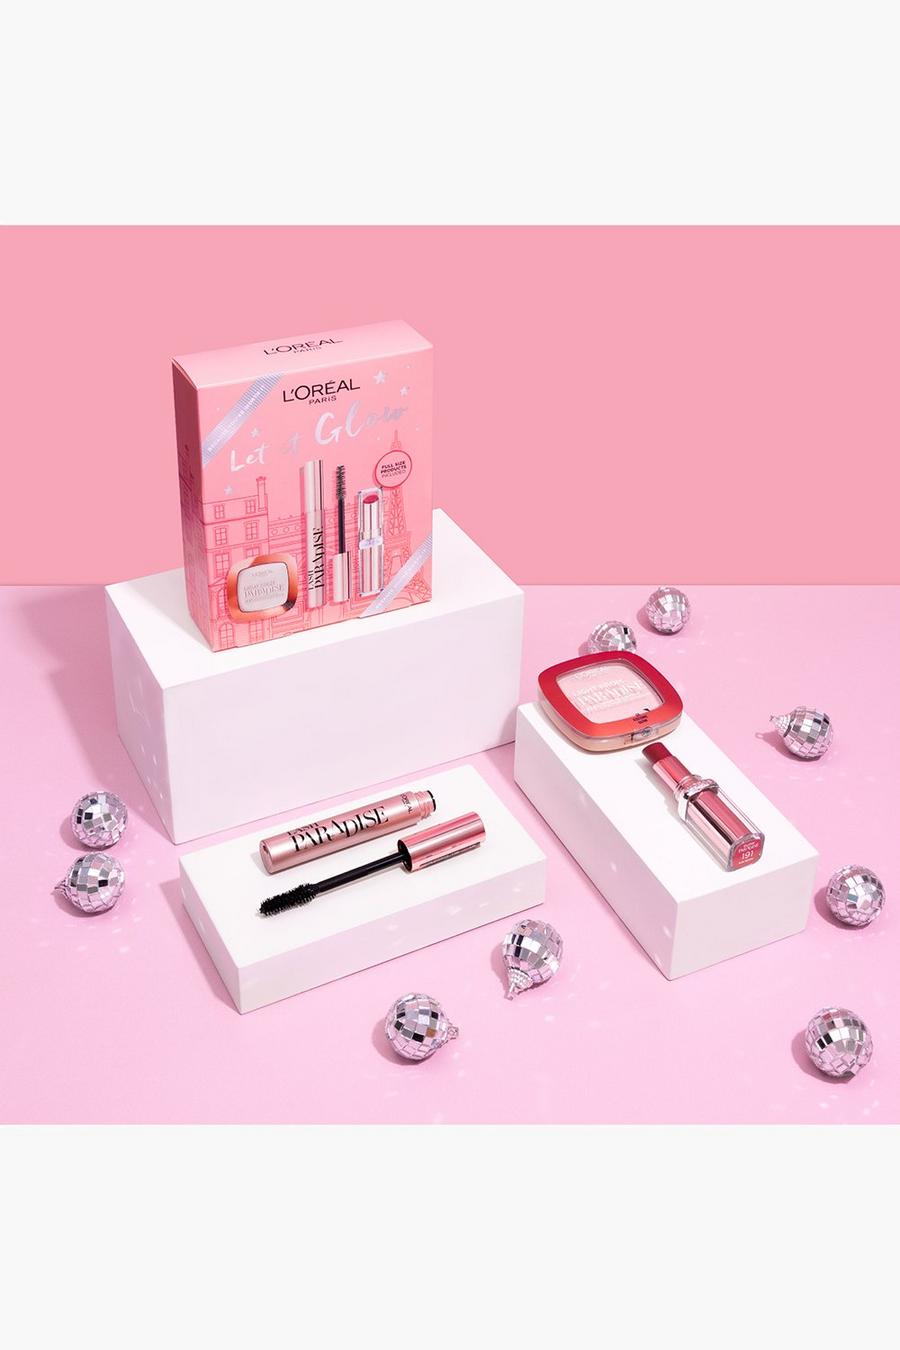 Pink rosa L'Oréal Paris Let It Glow Lipstick, Mascara and Highlighting Powder Trio Gift Set